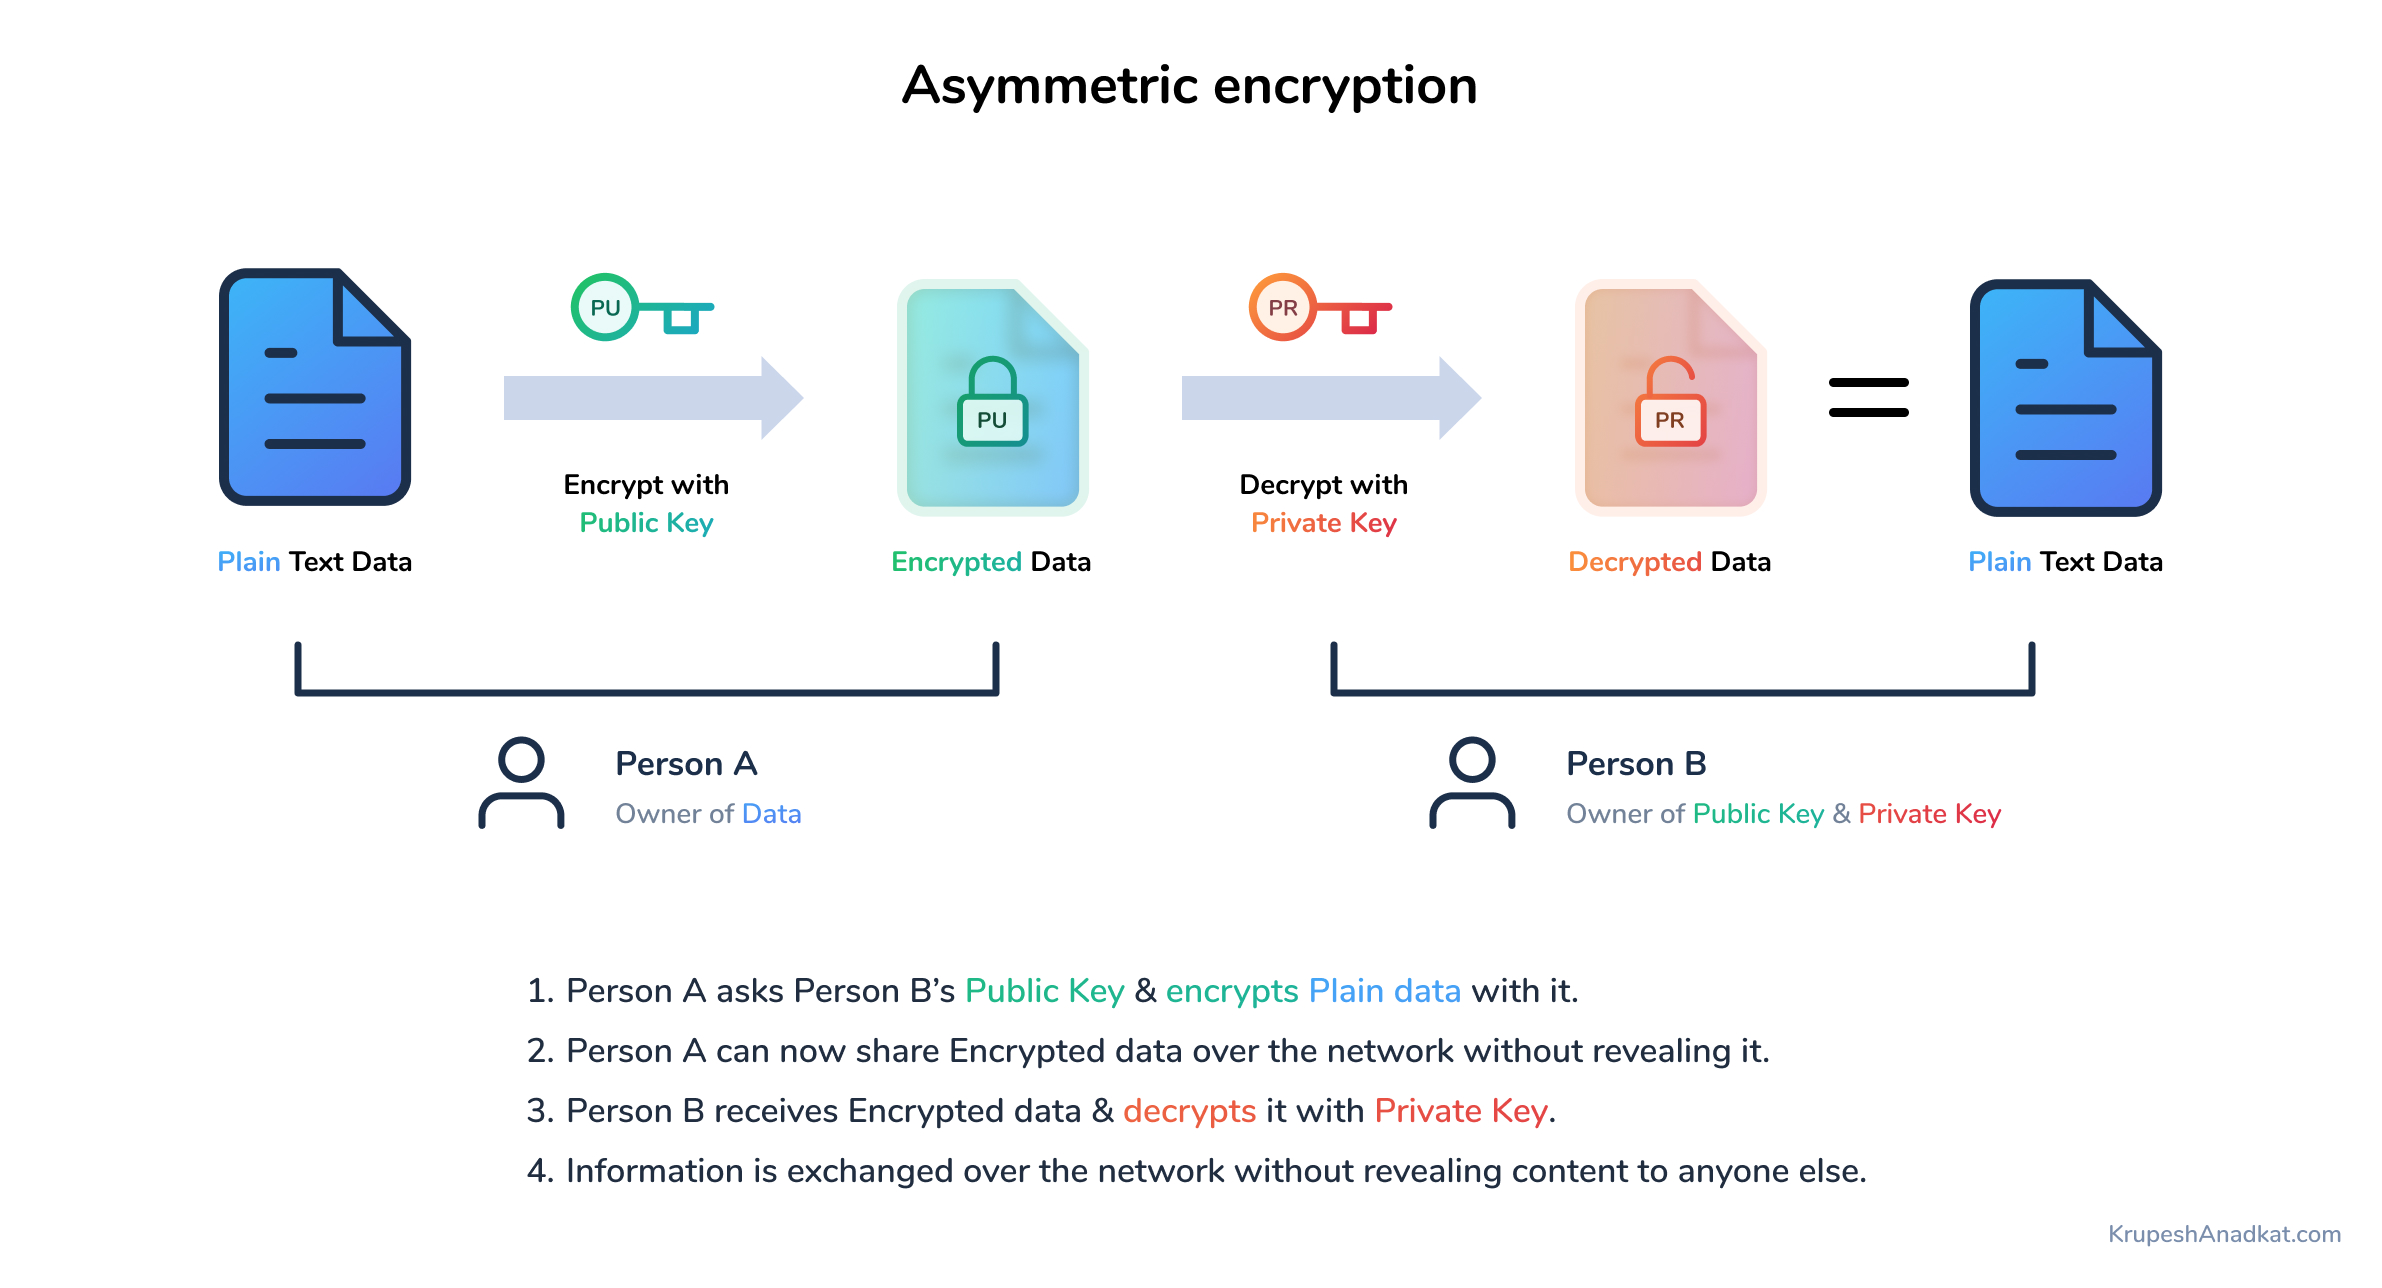 Quick Revision of Asymmetric Encryption